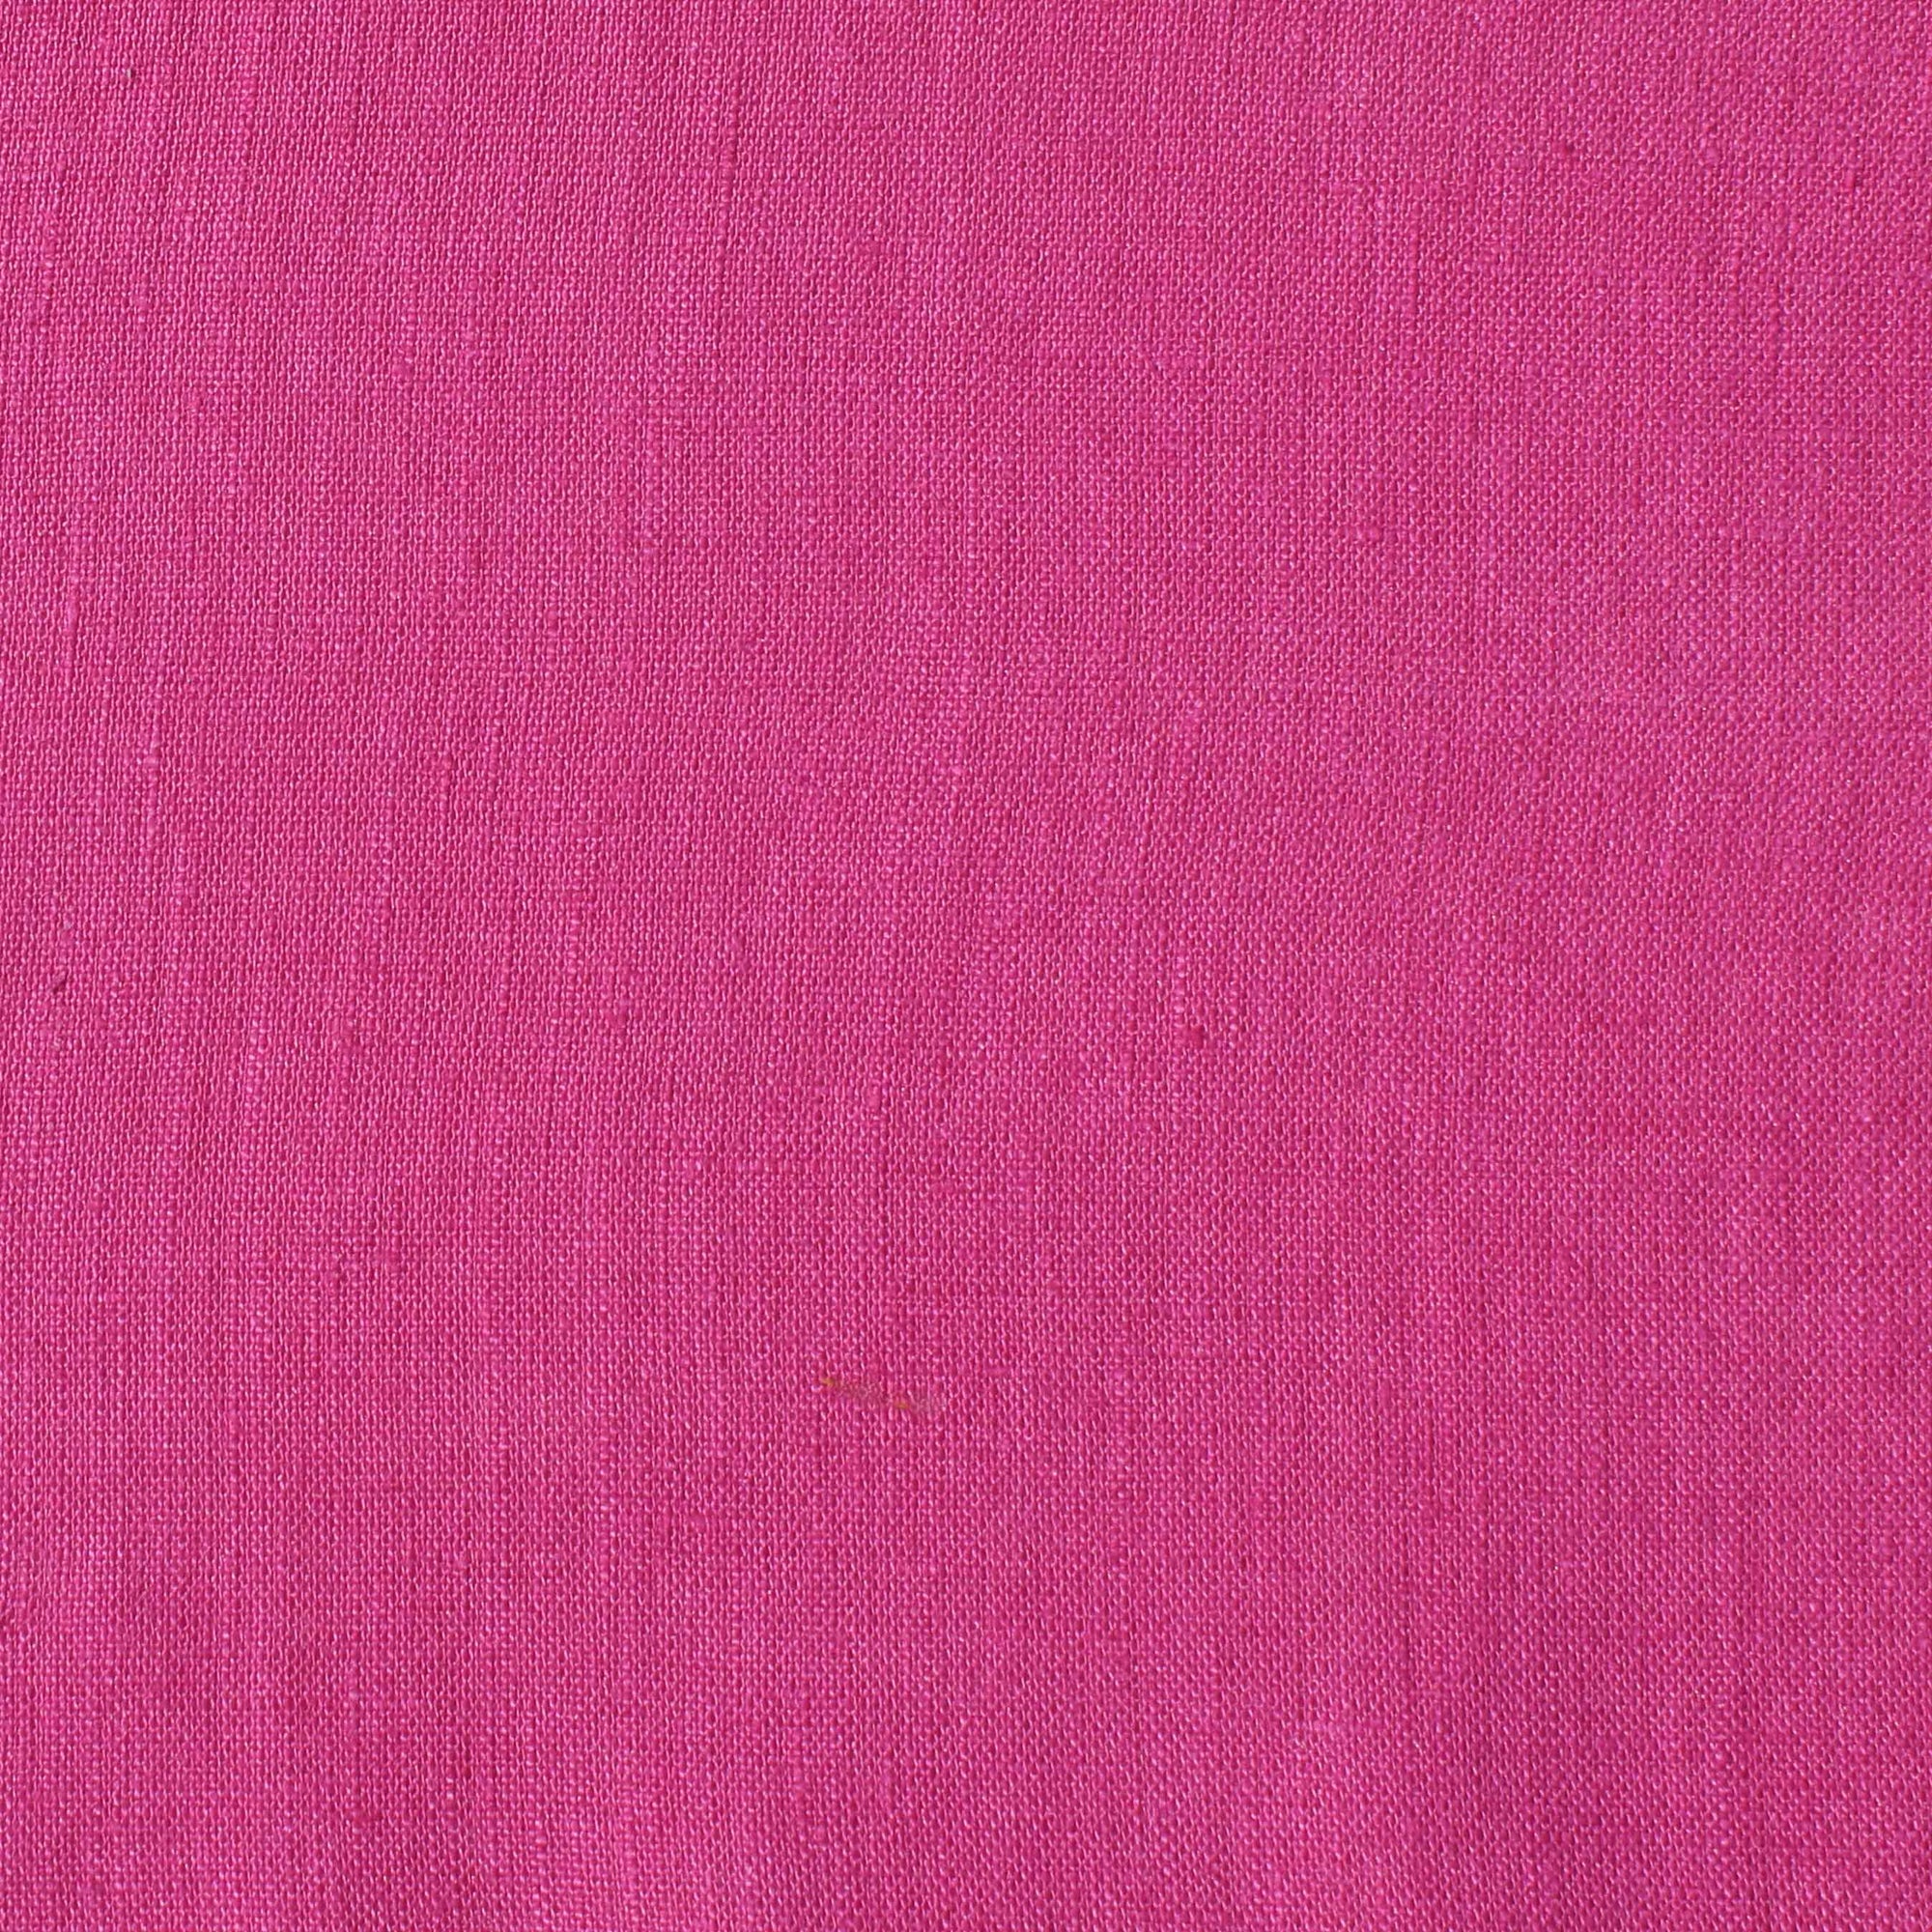 Fuchsia Pink Linen Lampshade - Tropikala